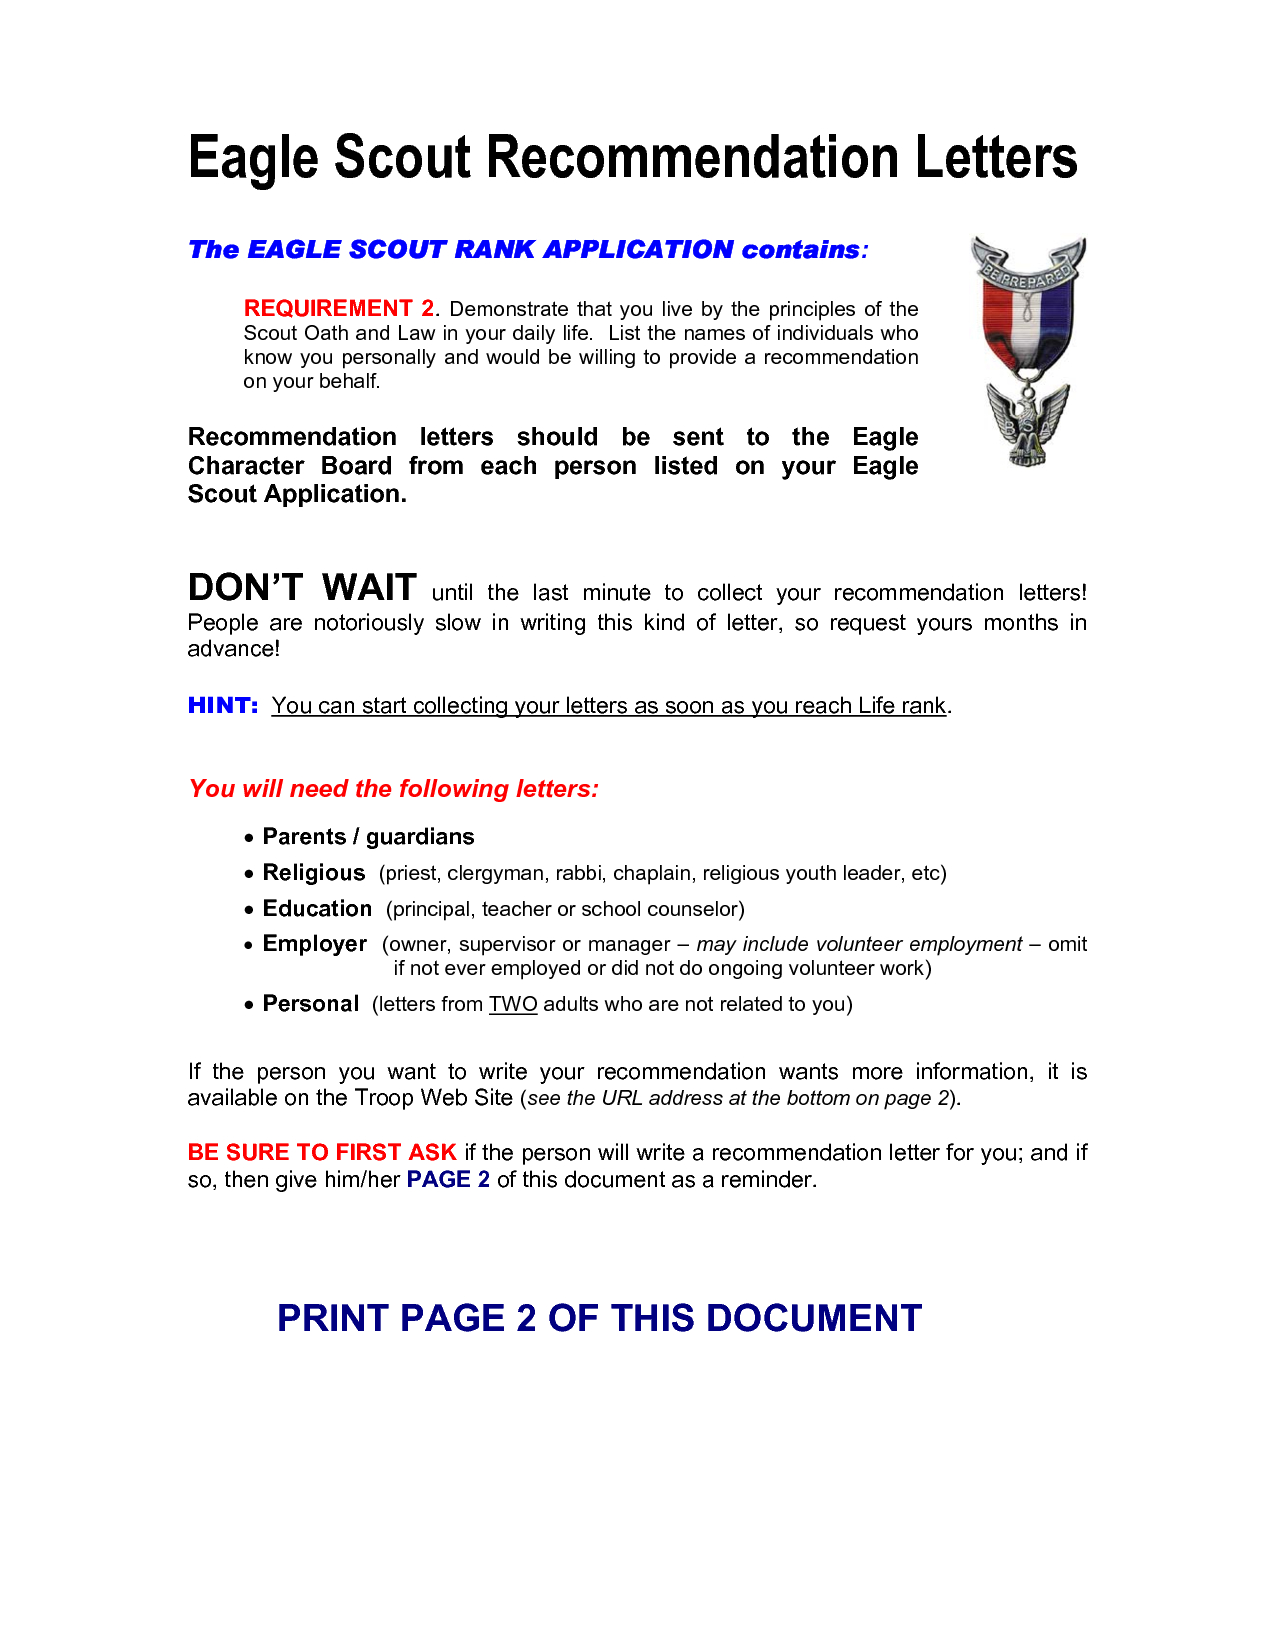 Eagle Recommendation Letter Template - Sample Eagle Re Mendation Letter Acurnamedia